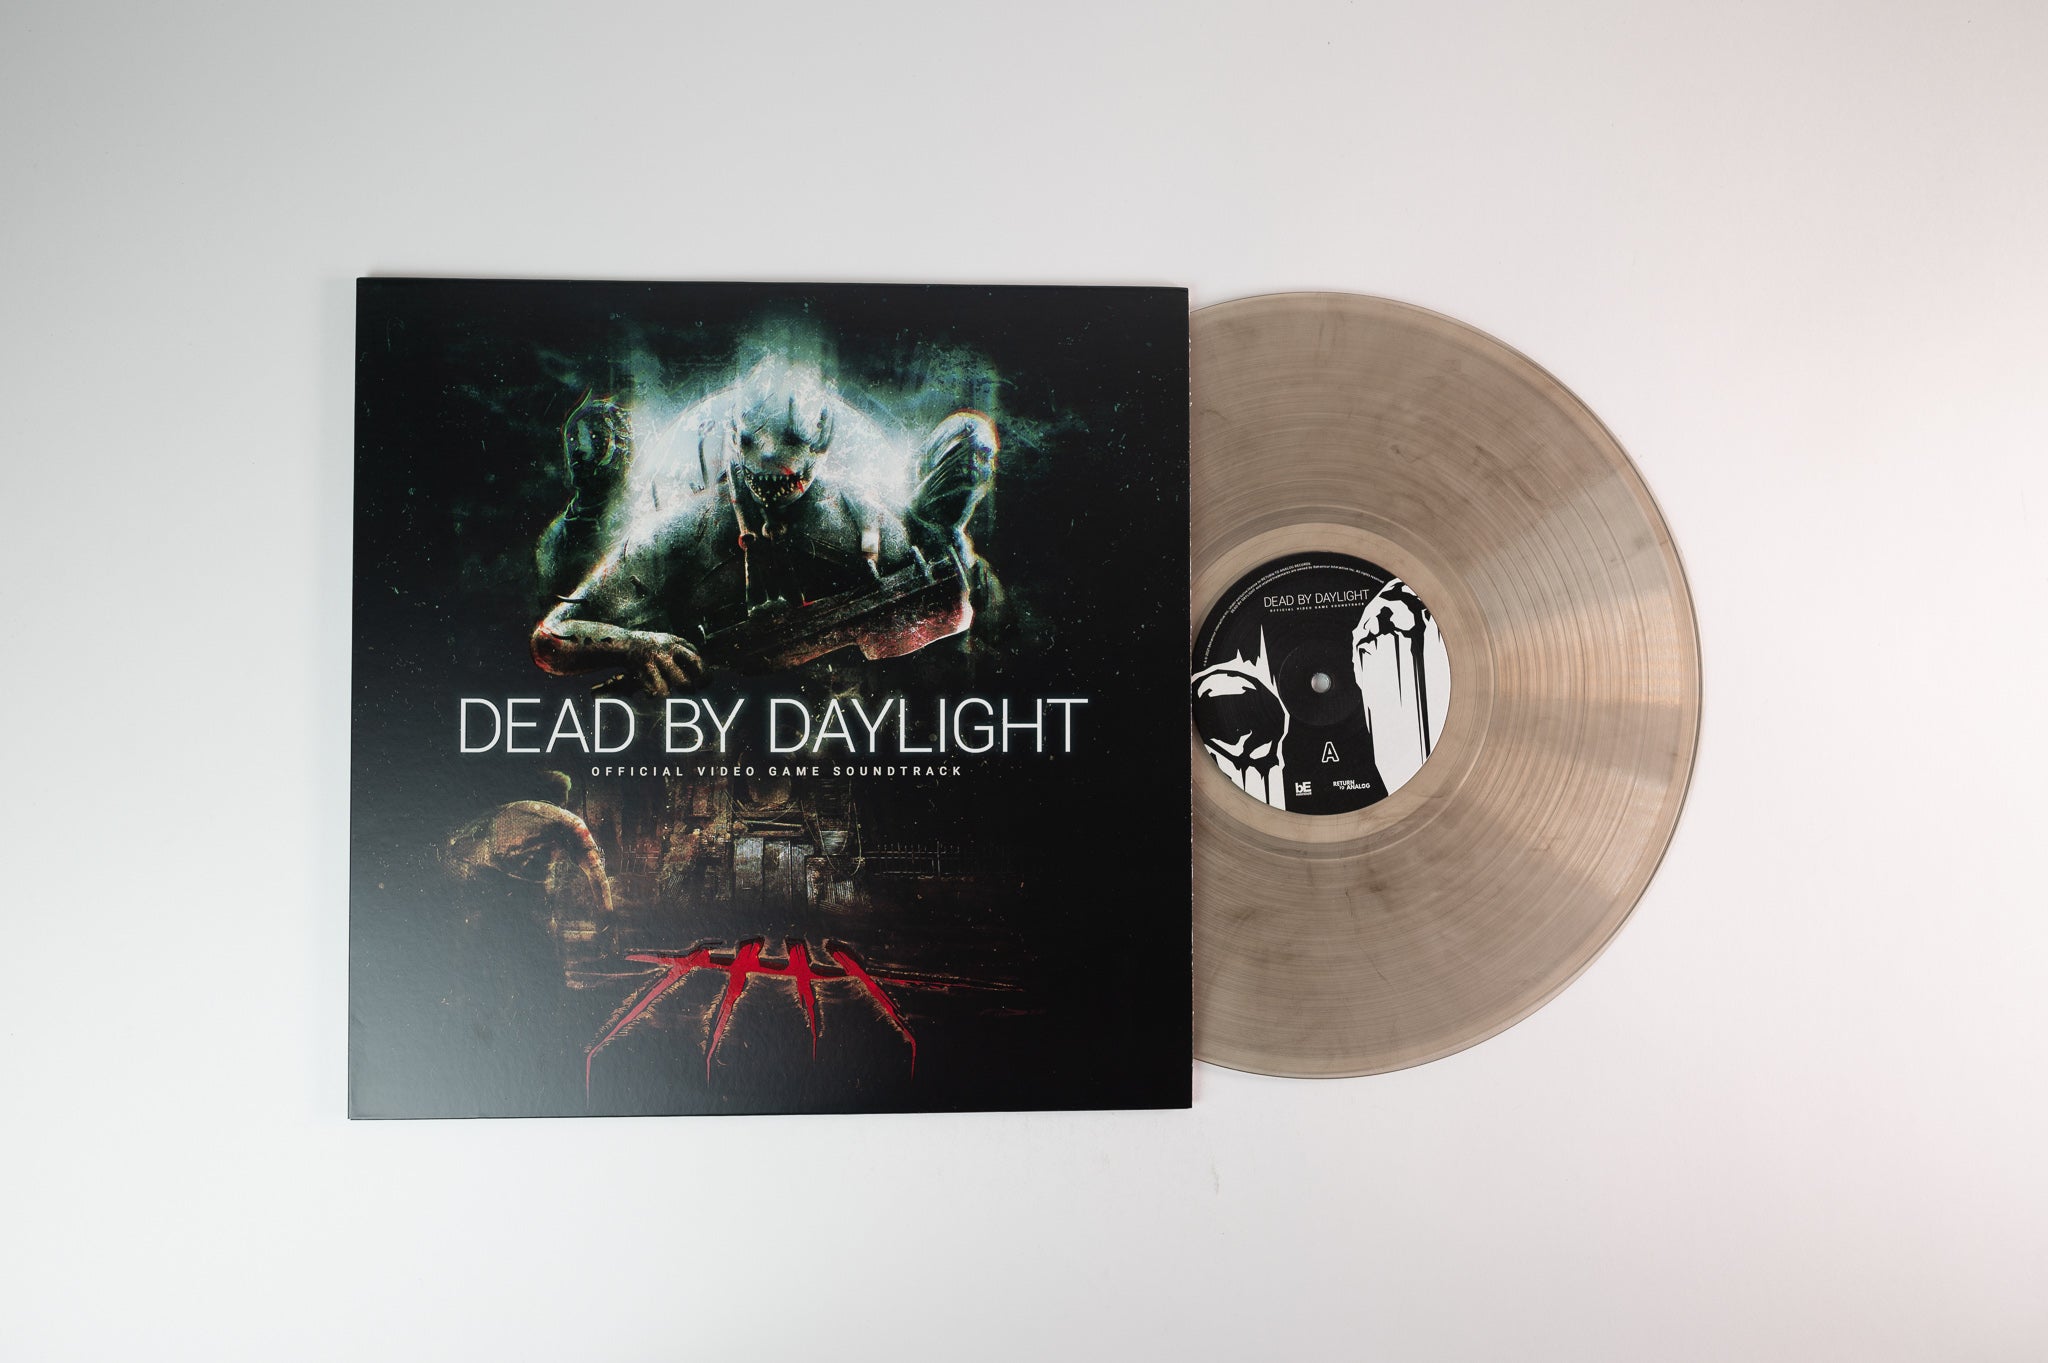 Michel F. April - Dead By Daylight (Official Video Game Soundtrack) on Return To Analog - Black Fog Vinyl